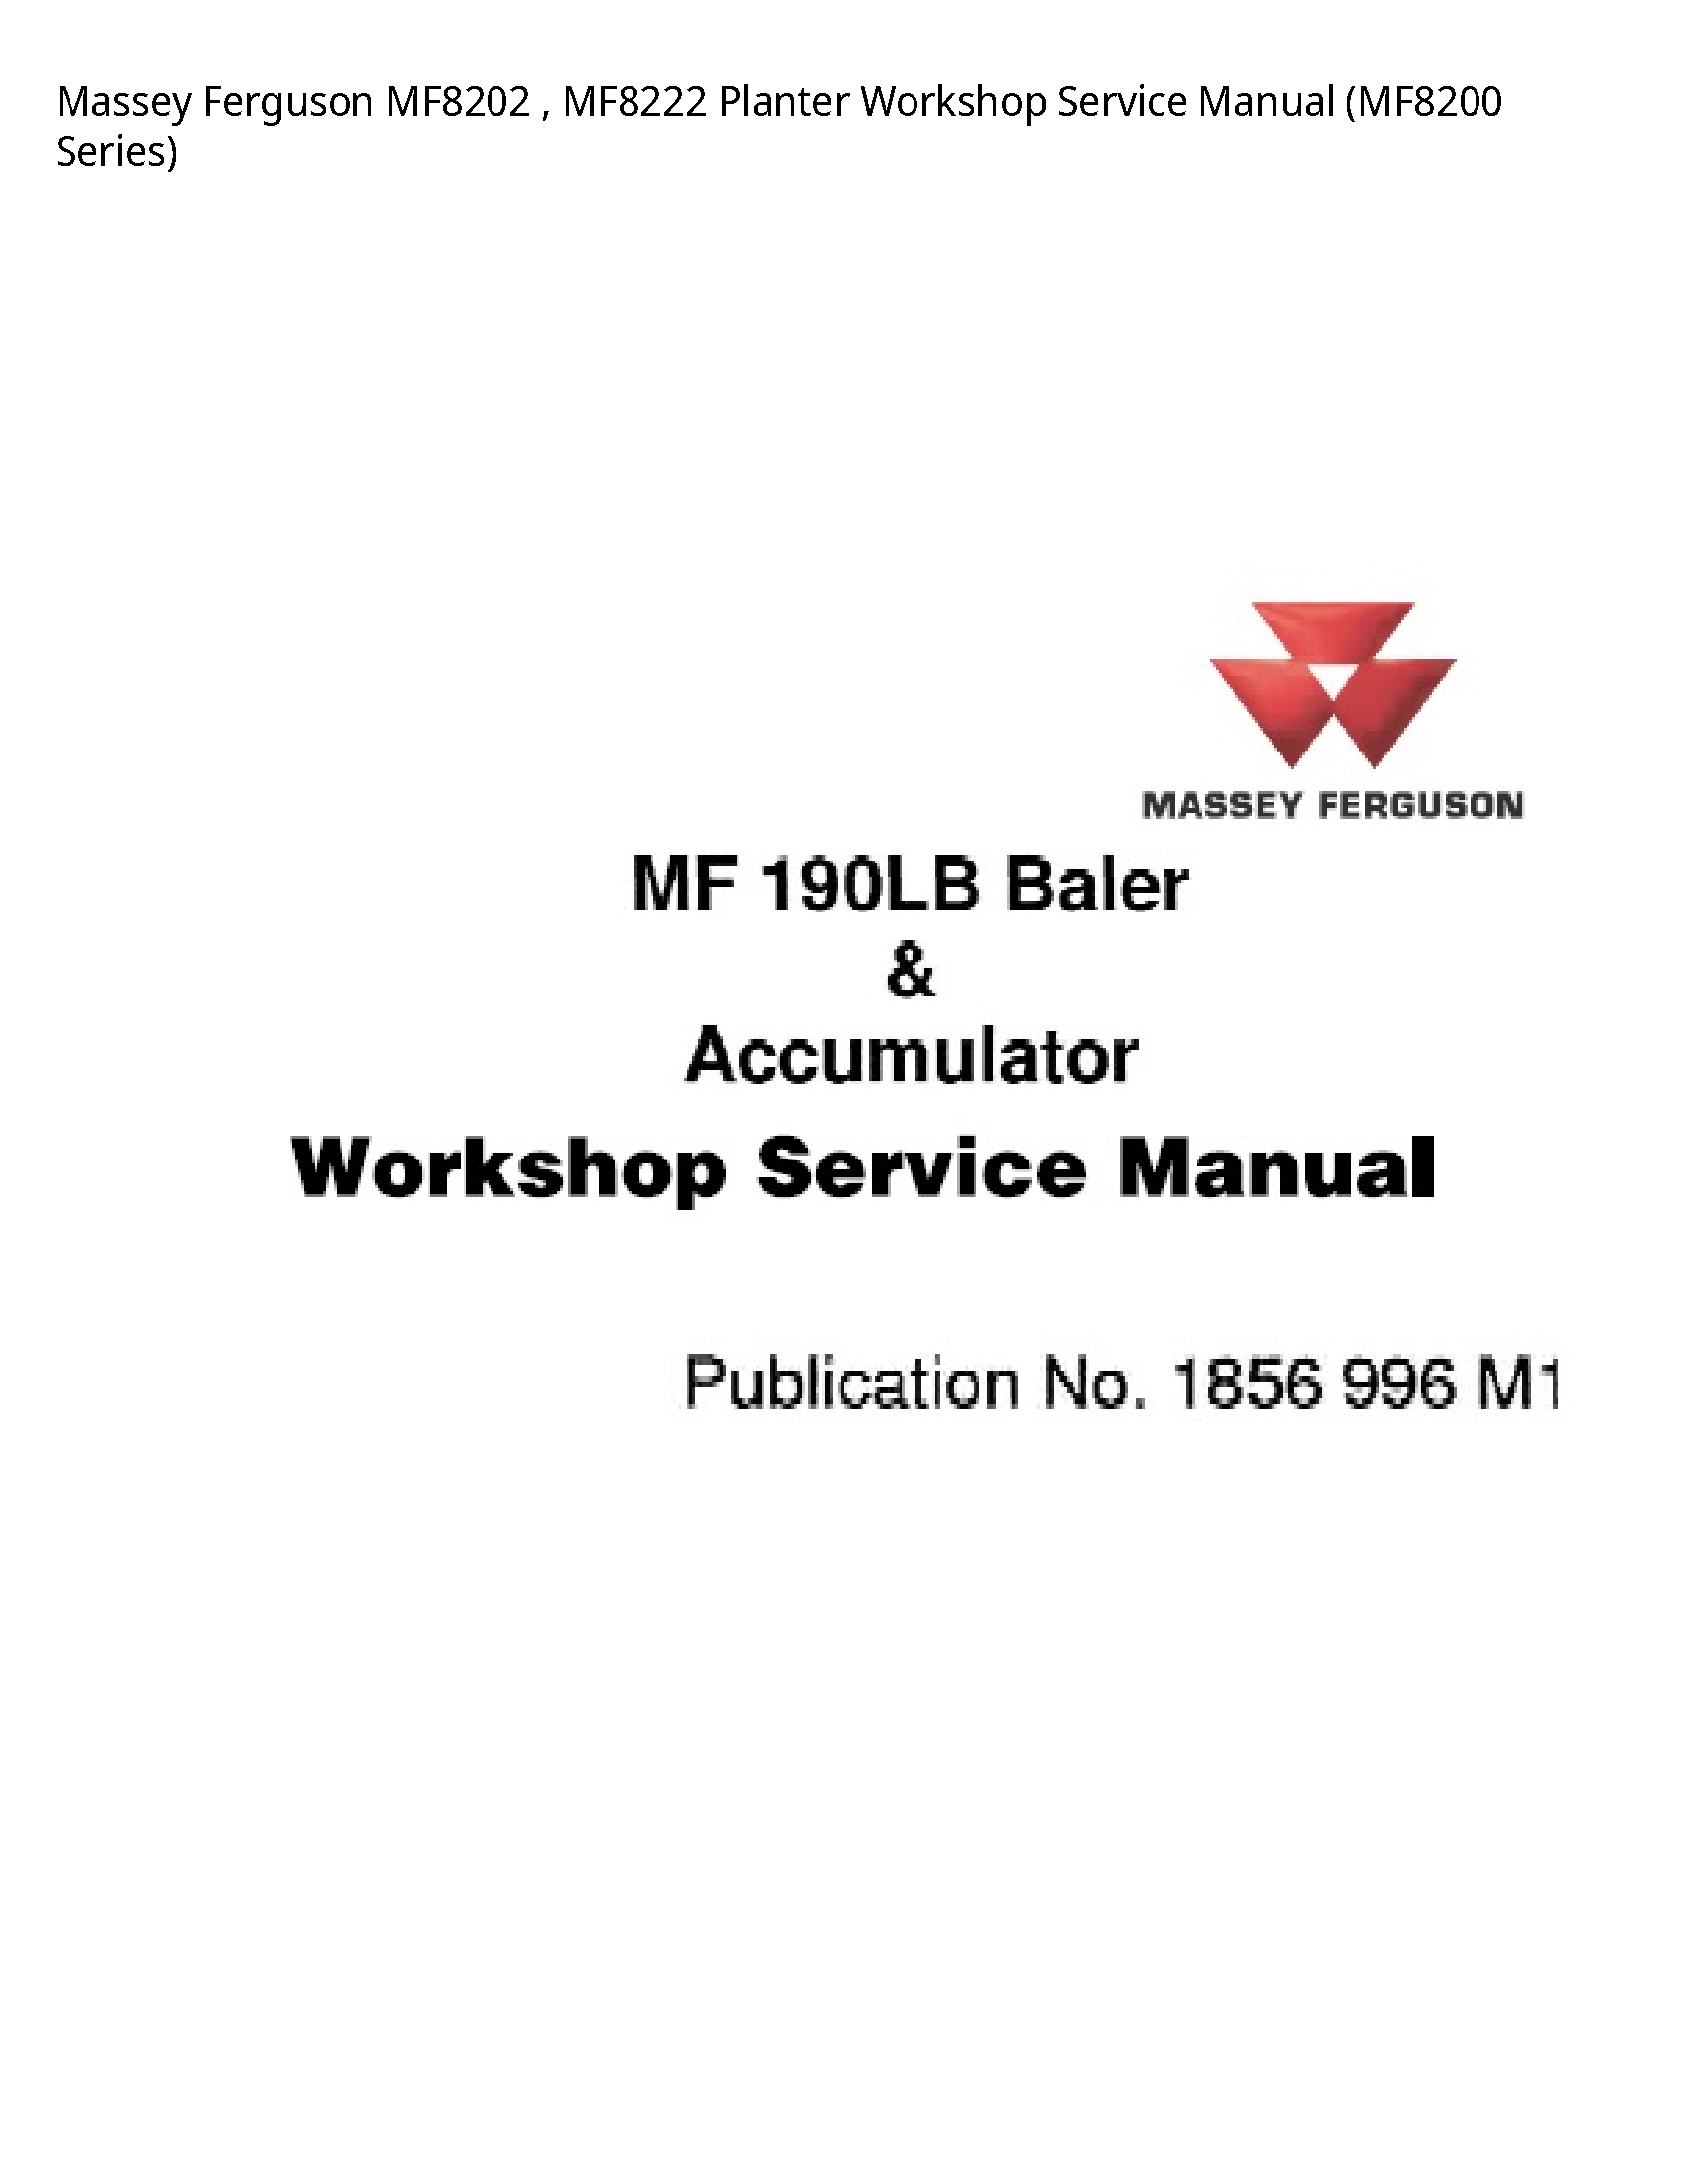 Massey Ferguson MF8202 Planter Service manual